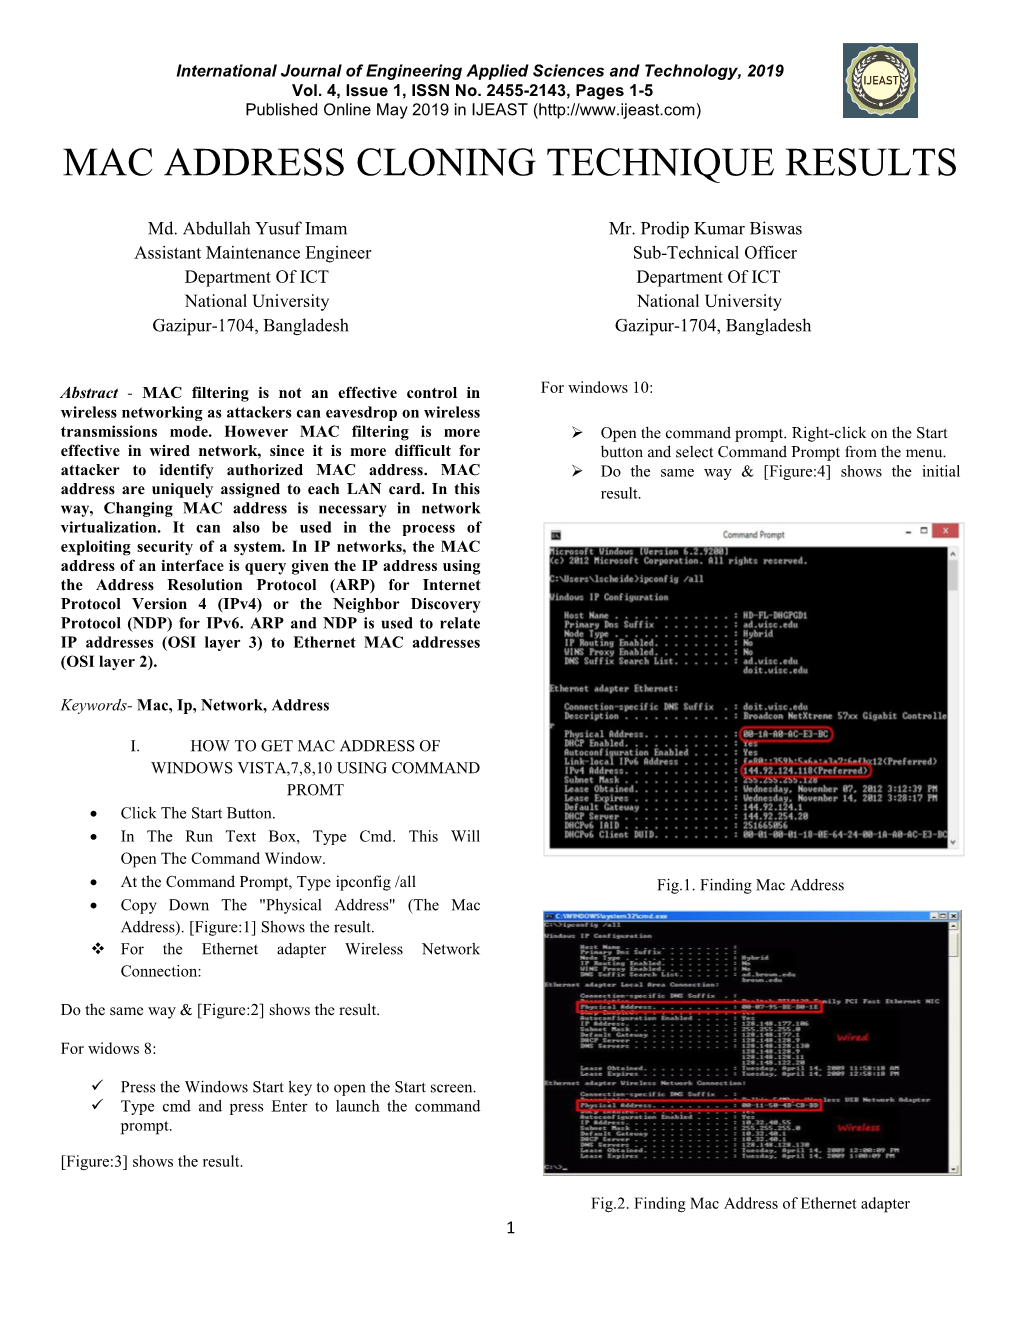 Mac Address Cloning Technique Results